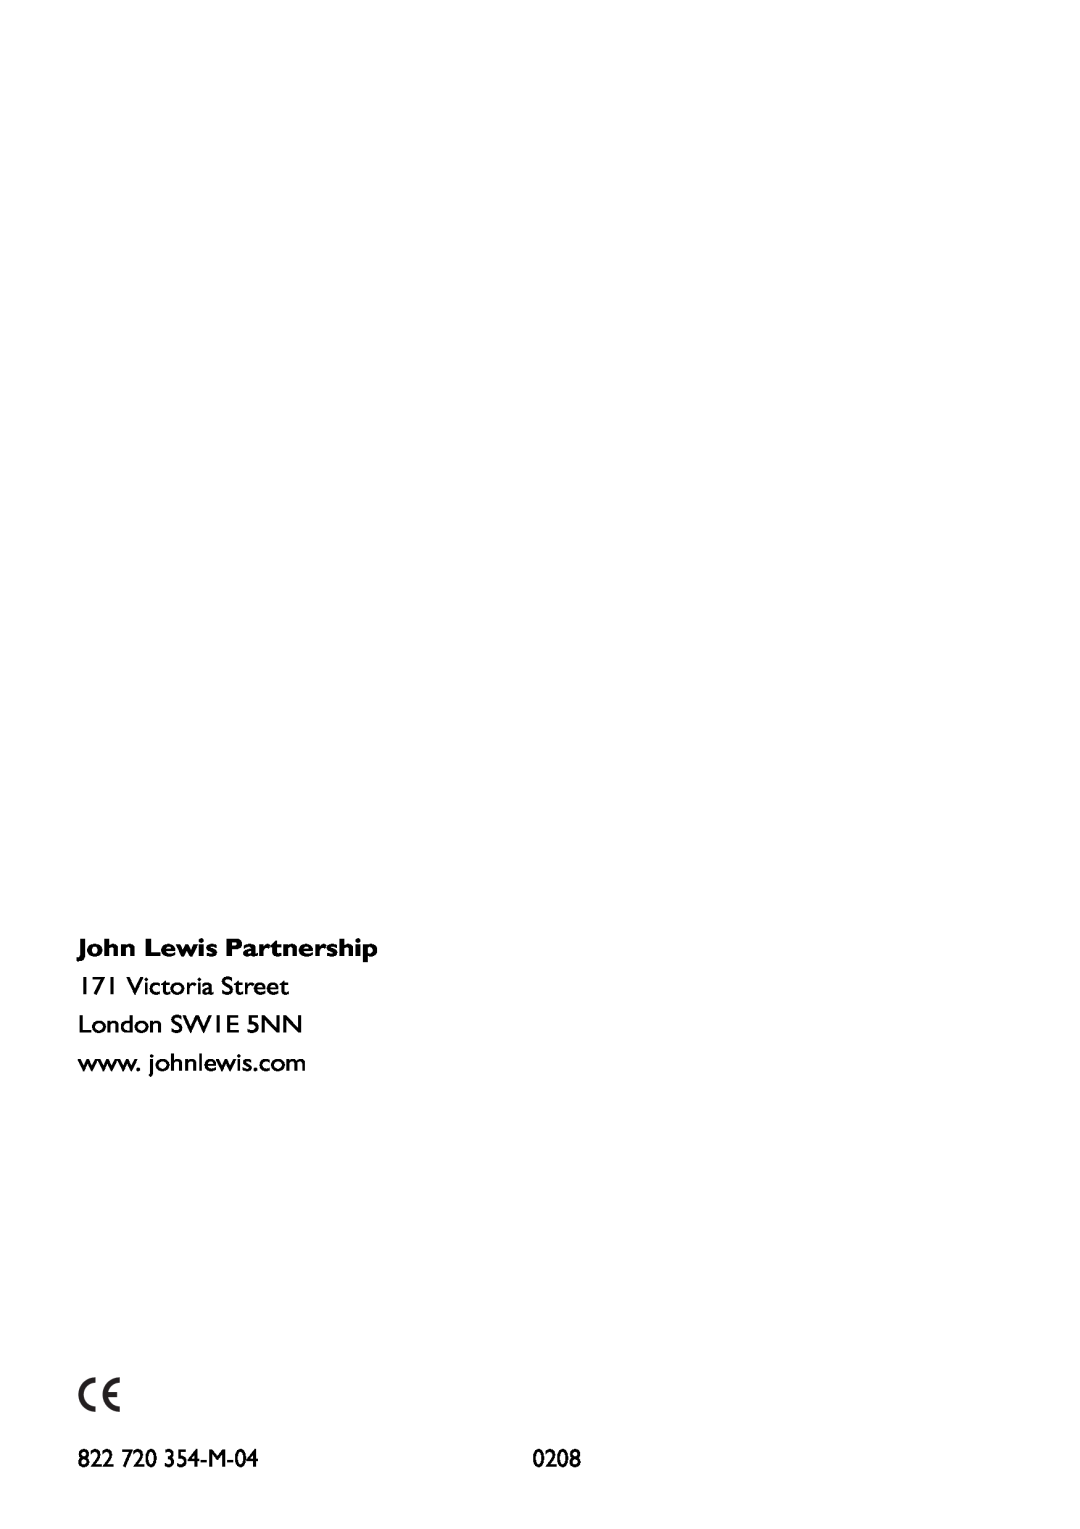 John Lewis JLBIOS609 manual John Lewis Partnership, 822 720 354-M-04, 0208 